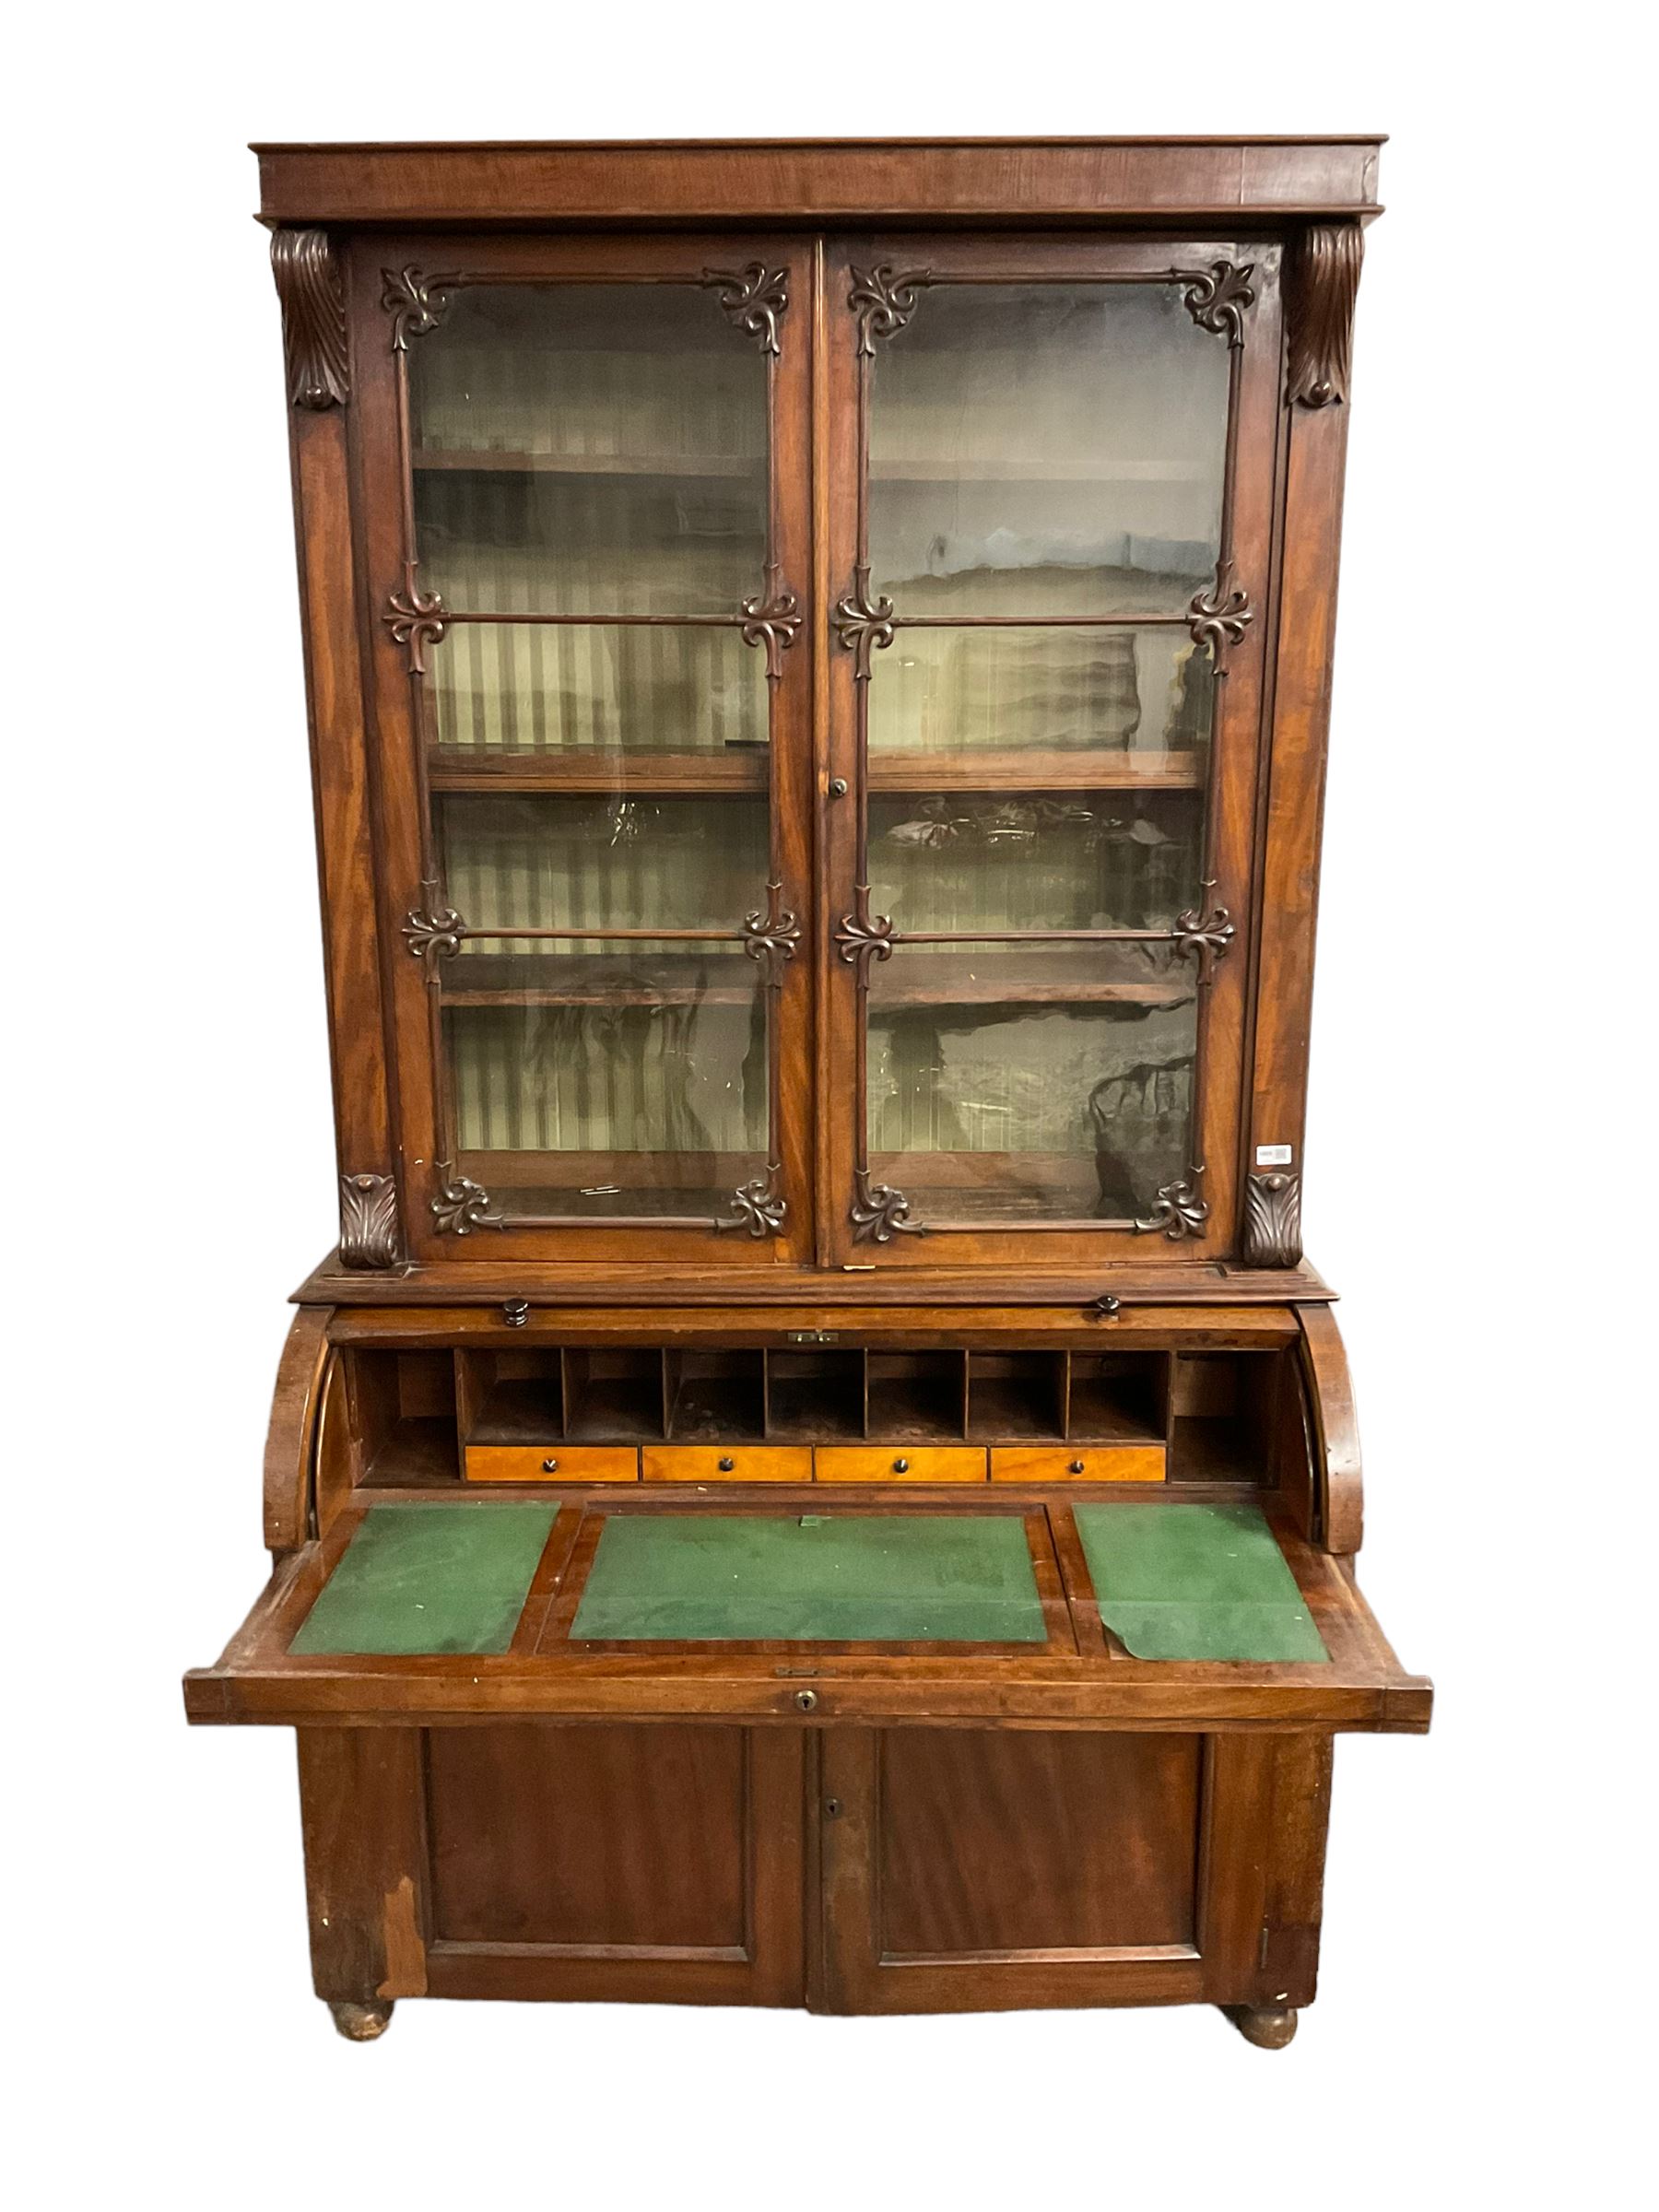 Mid-19th century mahogany secretaire bookcase - Image 8 of 8